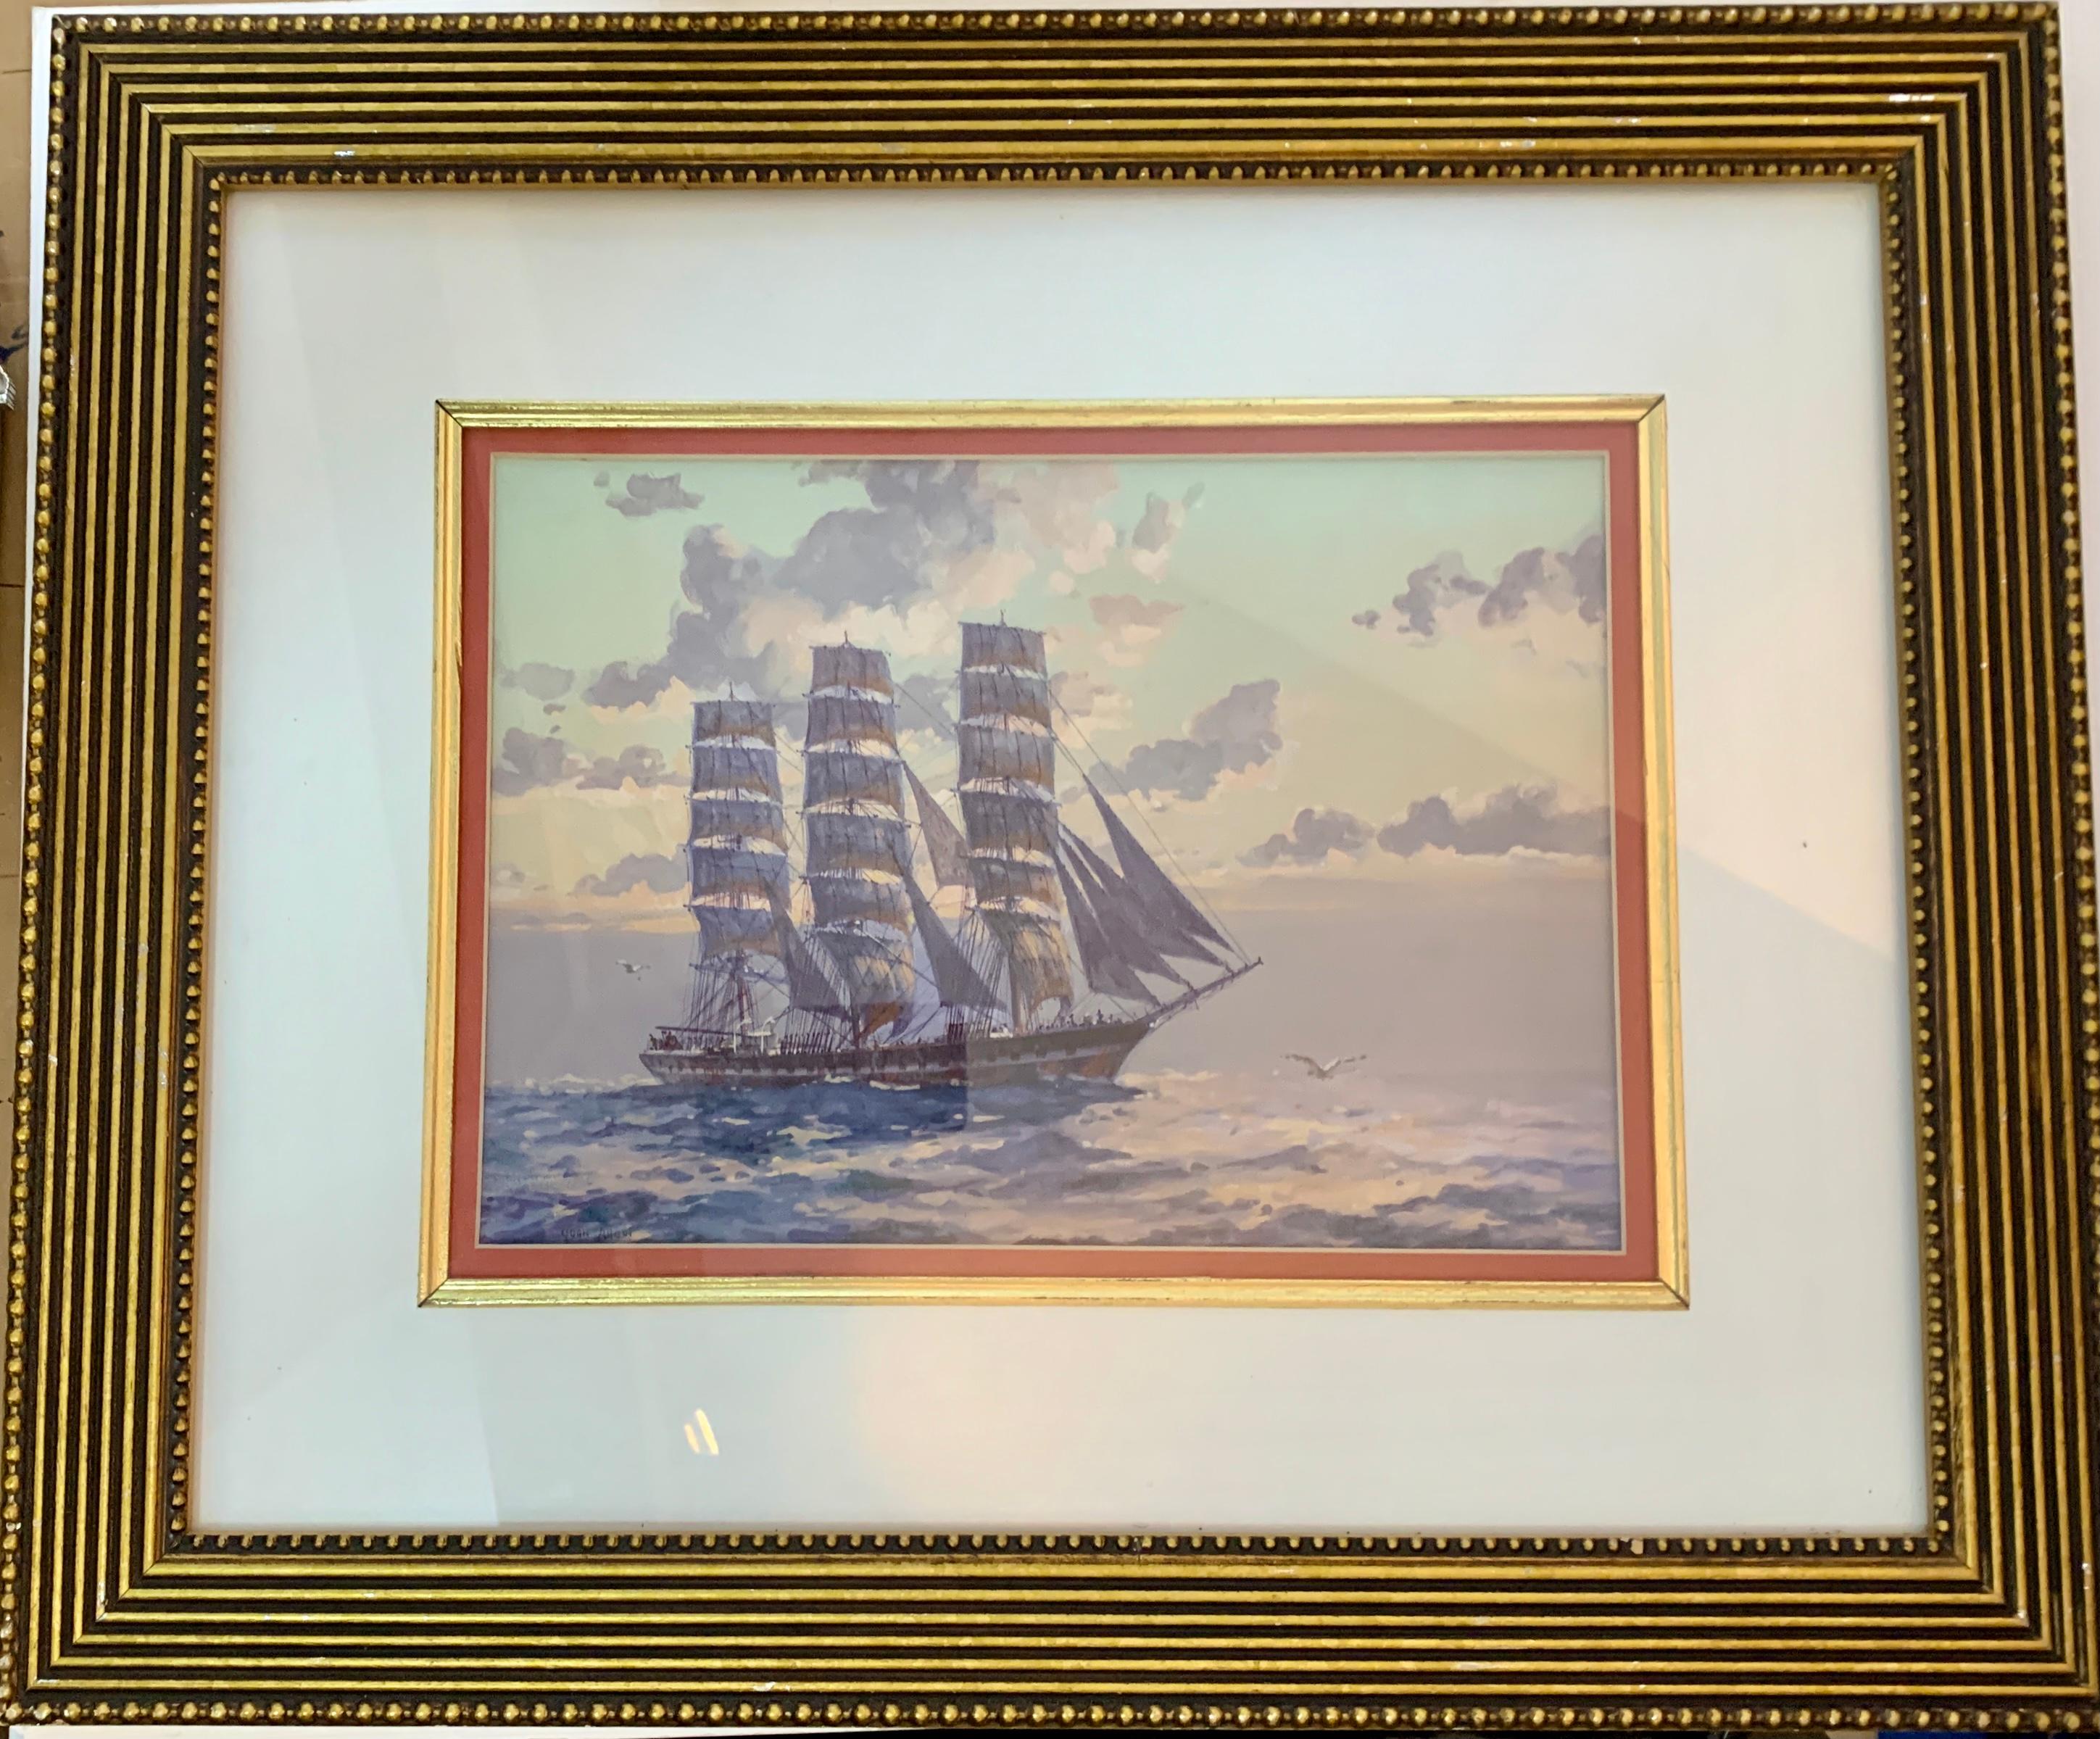 English tea Clipper ship in full sail at sea with the Sun rising